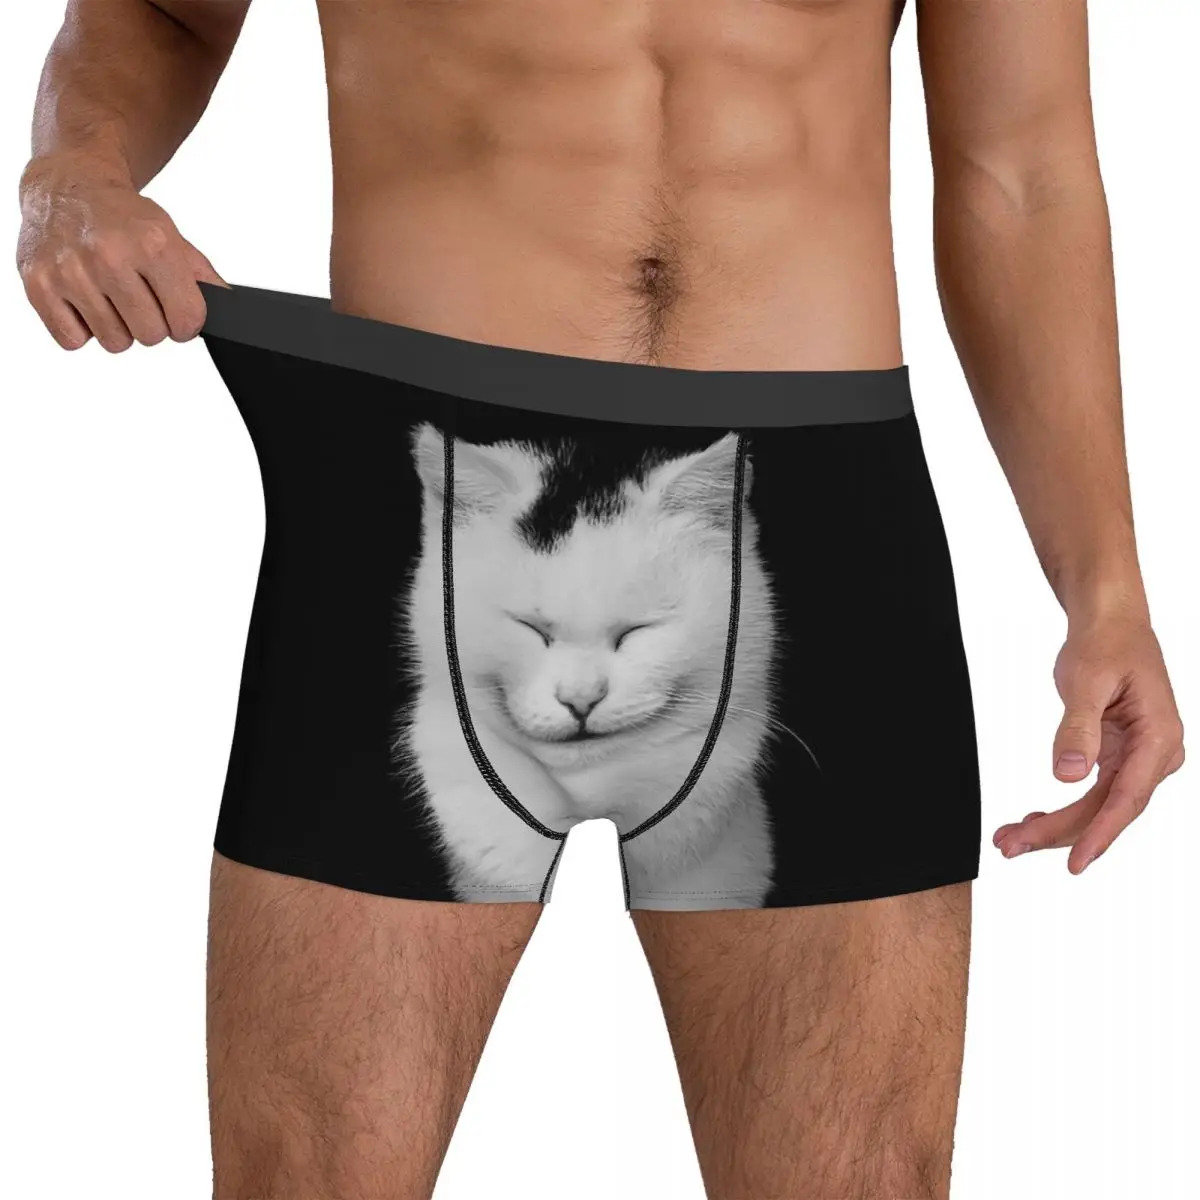 White Cat Smiling Underpants Cotton Panties Funny Men's Underwear Ventilate Shorts